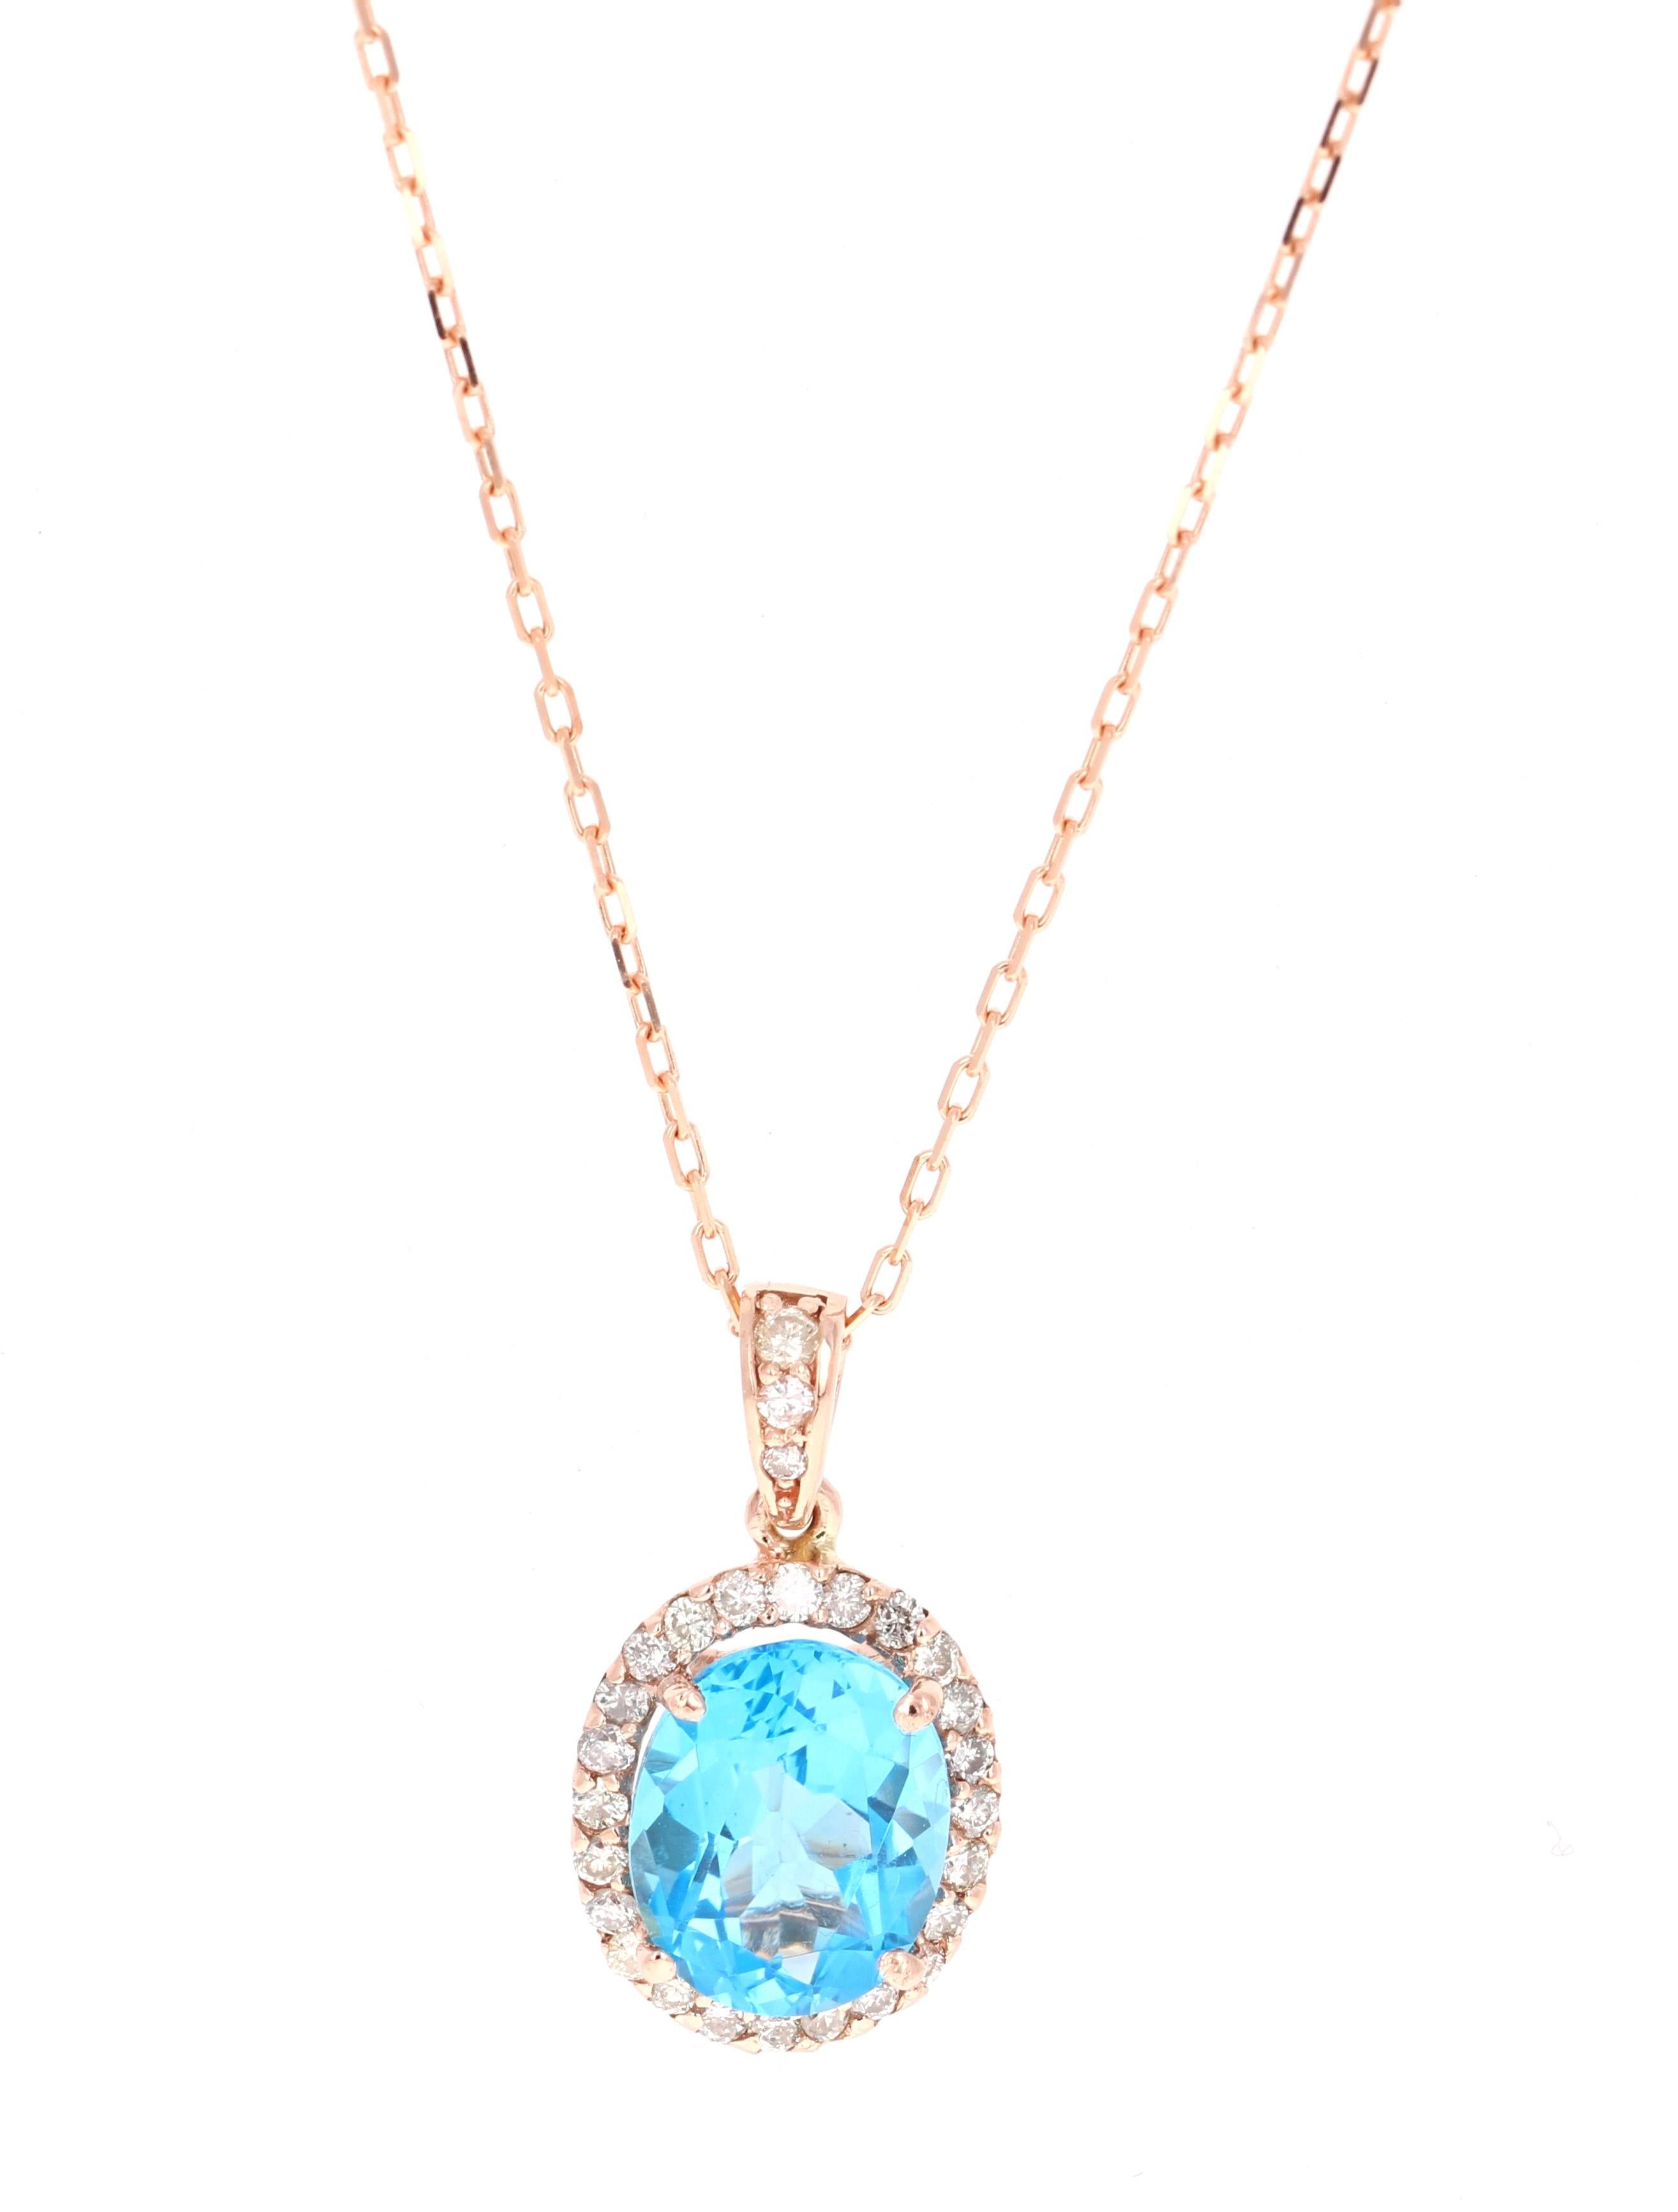 Oval Cut 4.94 Carat Blue Topaz and Diamond 14 Karat Rose Gold Chain Pendant For Sale